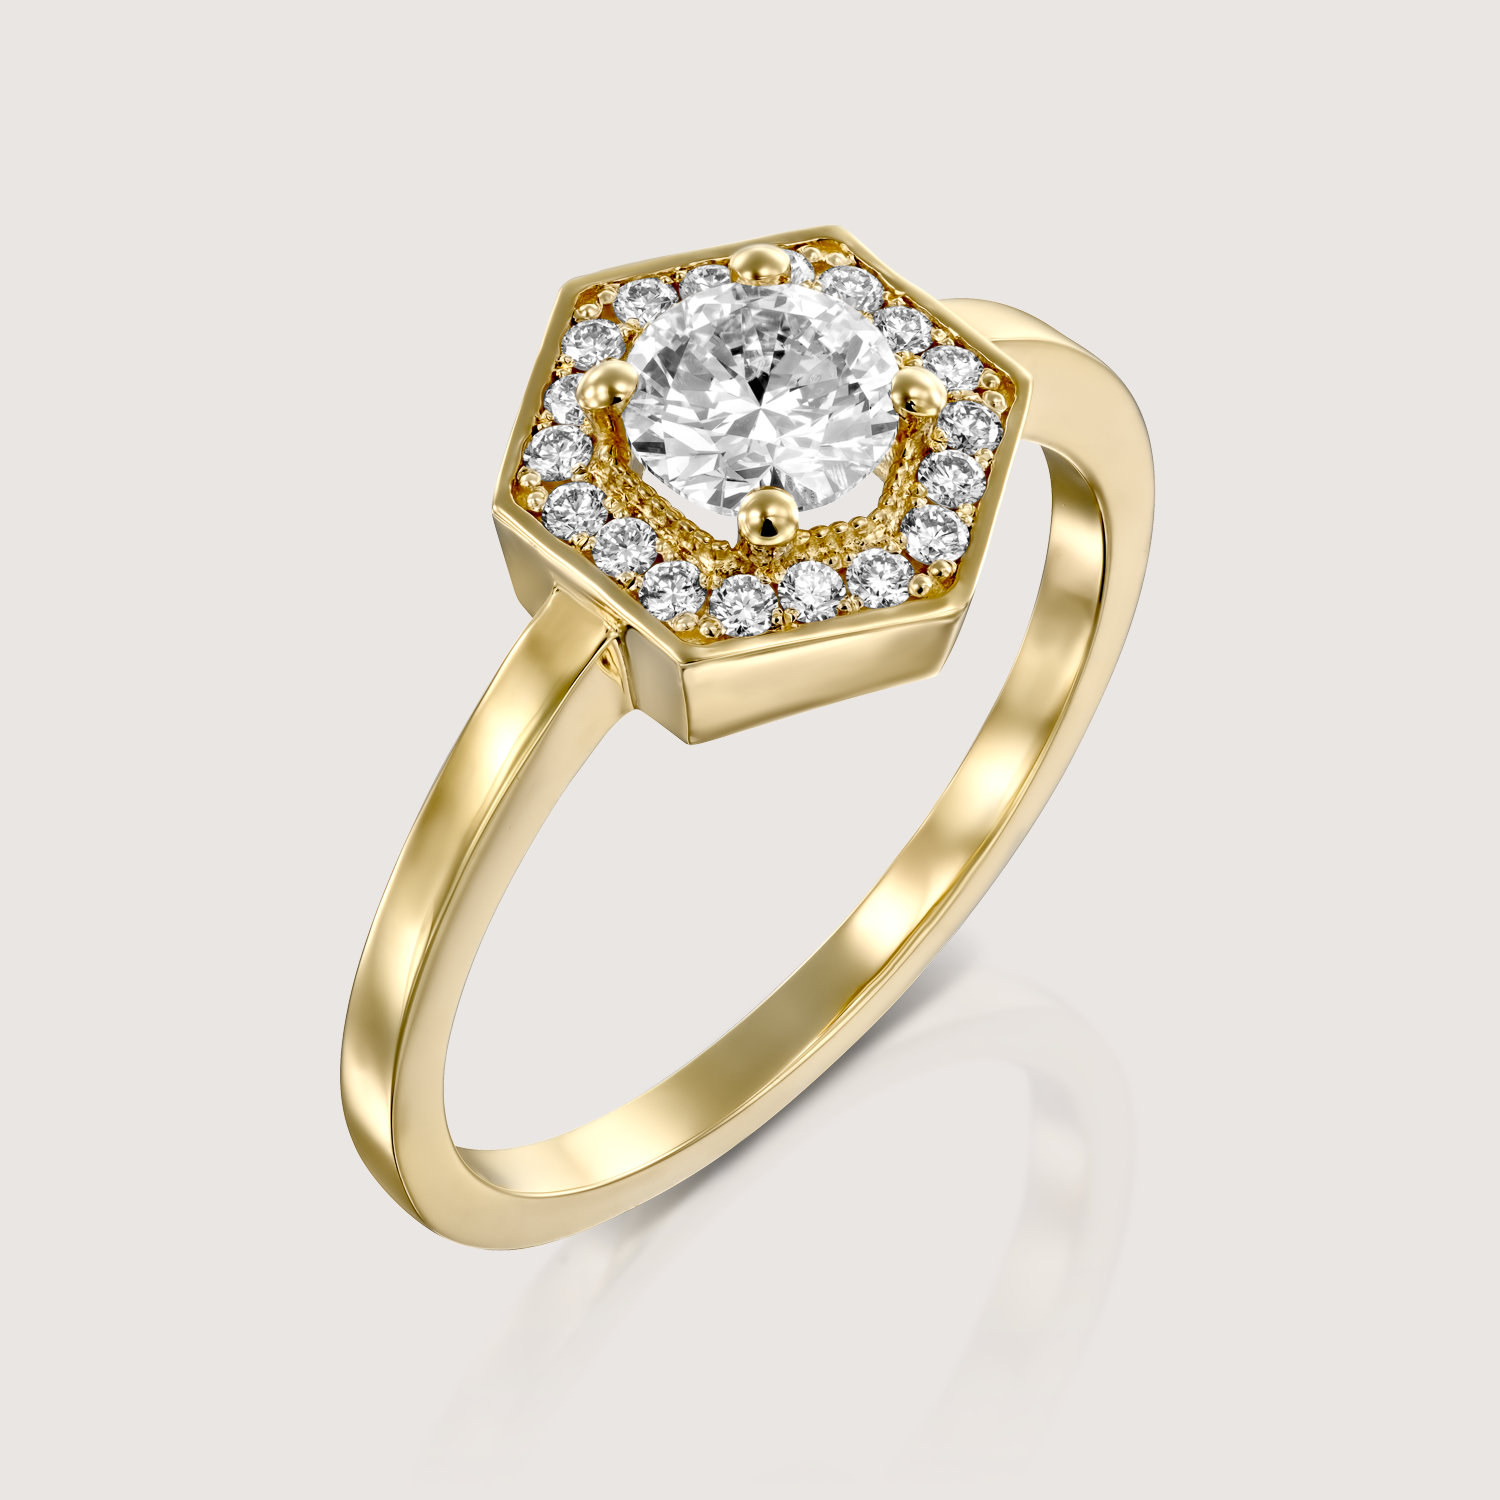 Amy Gold Ring White 5mm Diamond